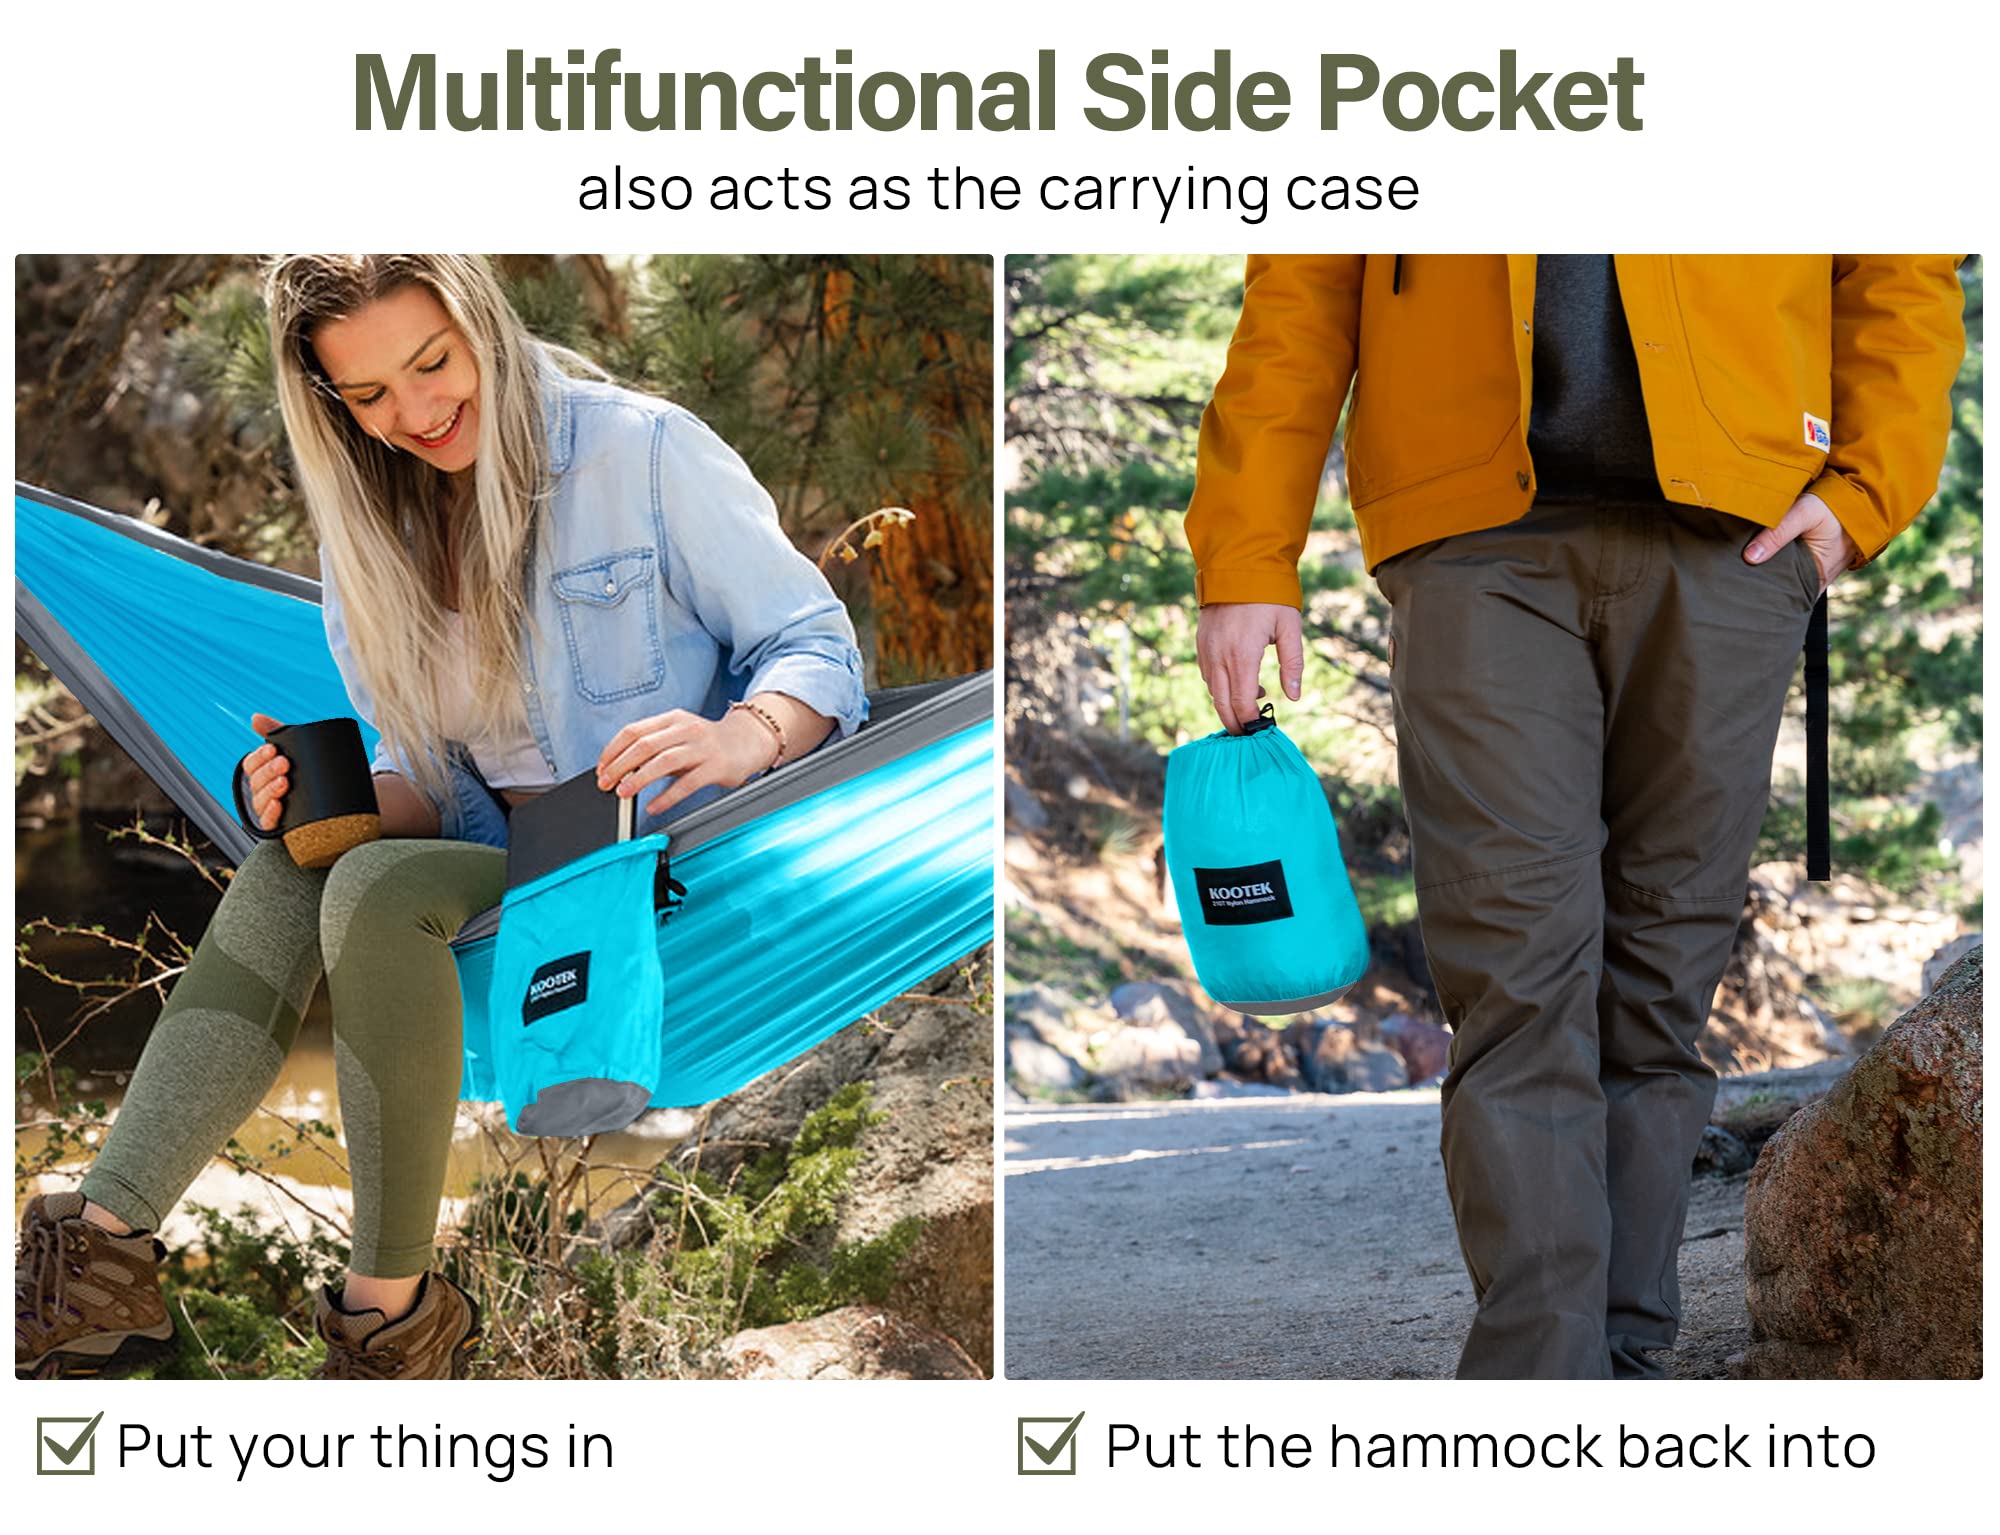 Kootek Camping Hammock Double & Single Portable Hammocks Camping Accessories for Outdoor, Indoor, Backpacking, Travel, Beach, Backyard, Patio, Hiking